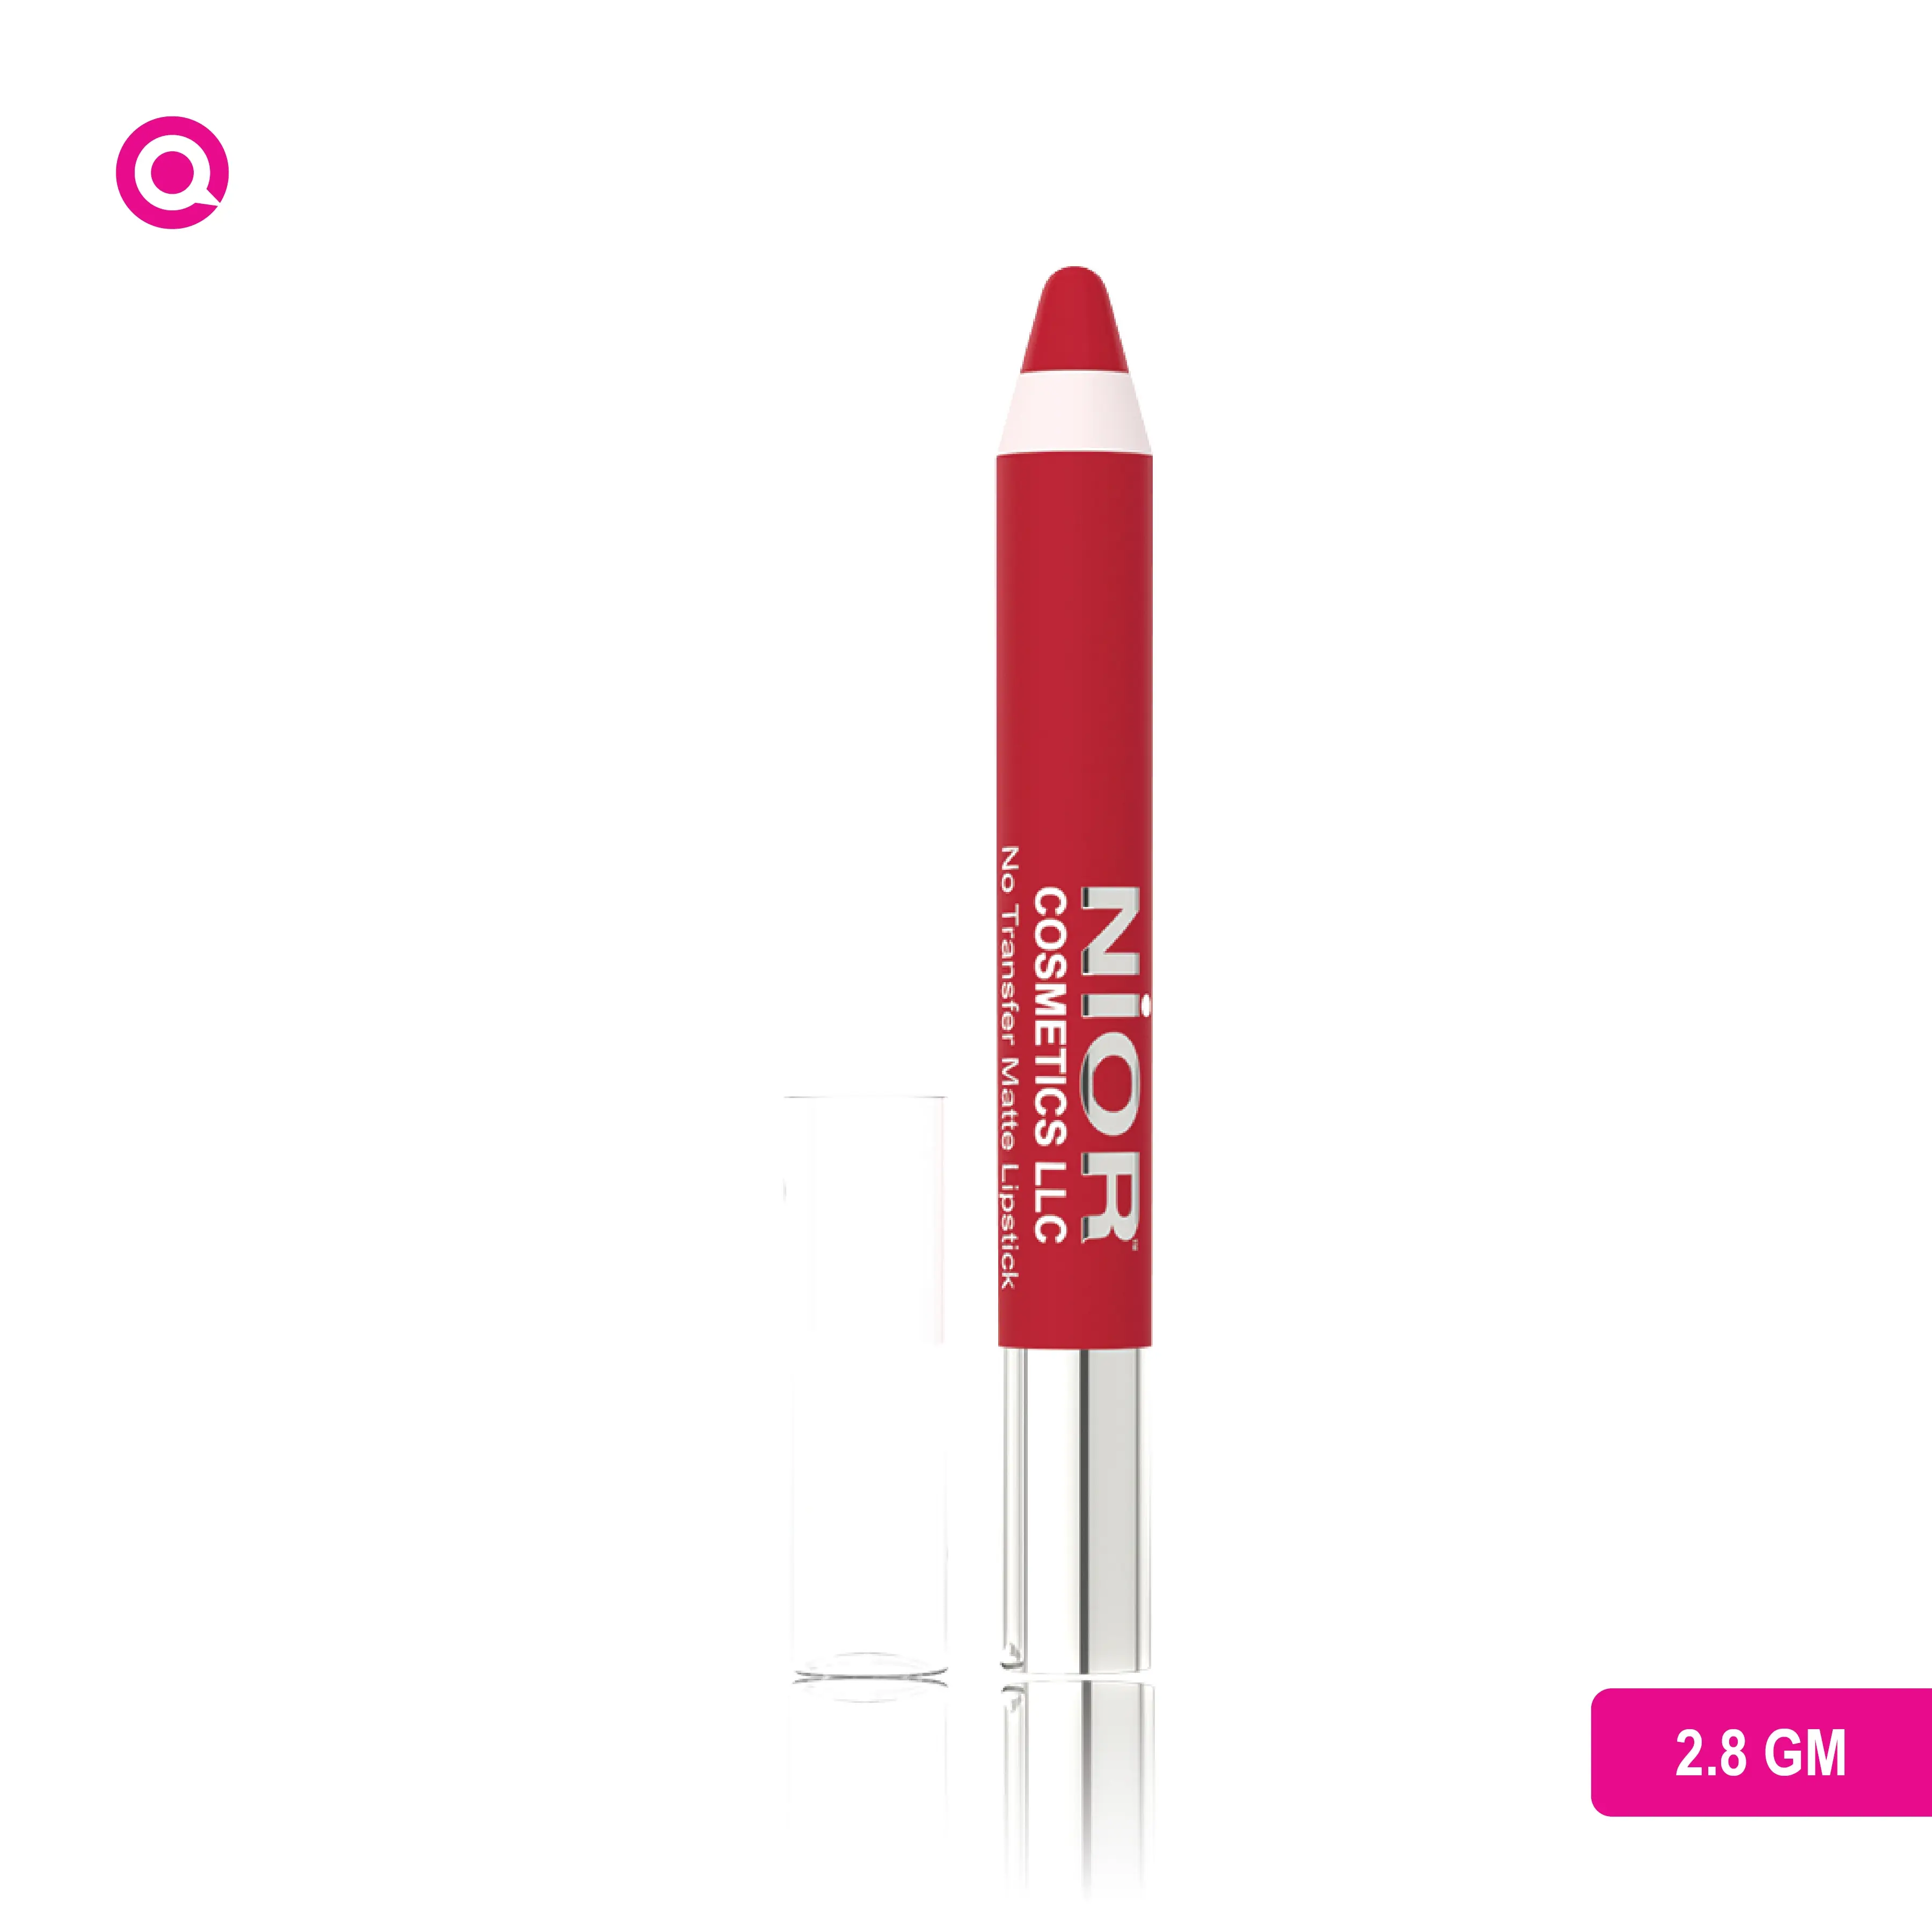 NIOR No Transfer Matte Lipstick - No. 10 product image showcasing its rich color and long-lasting formula.